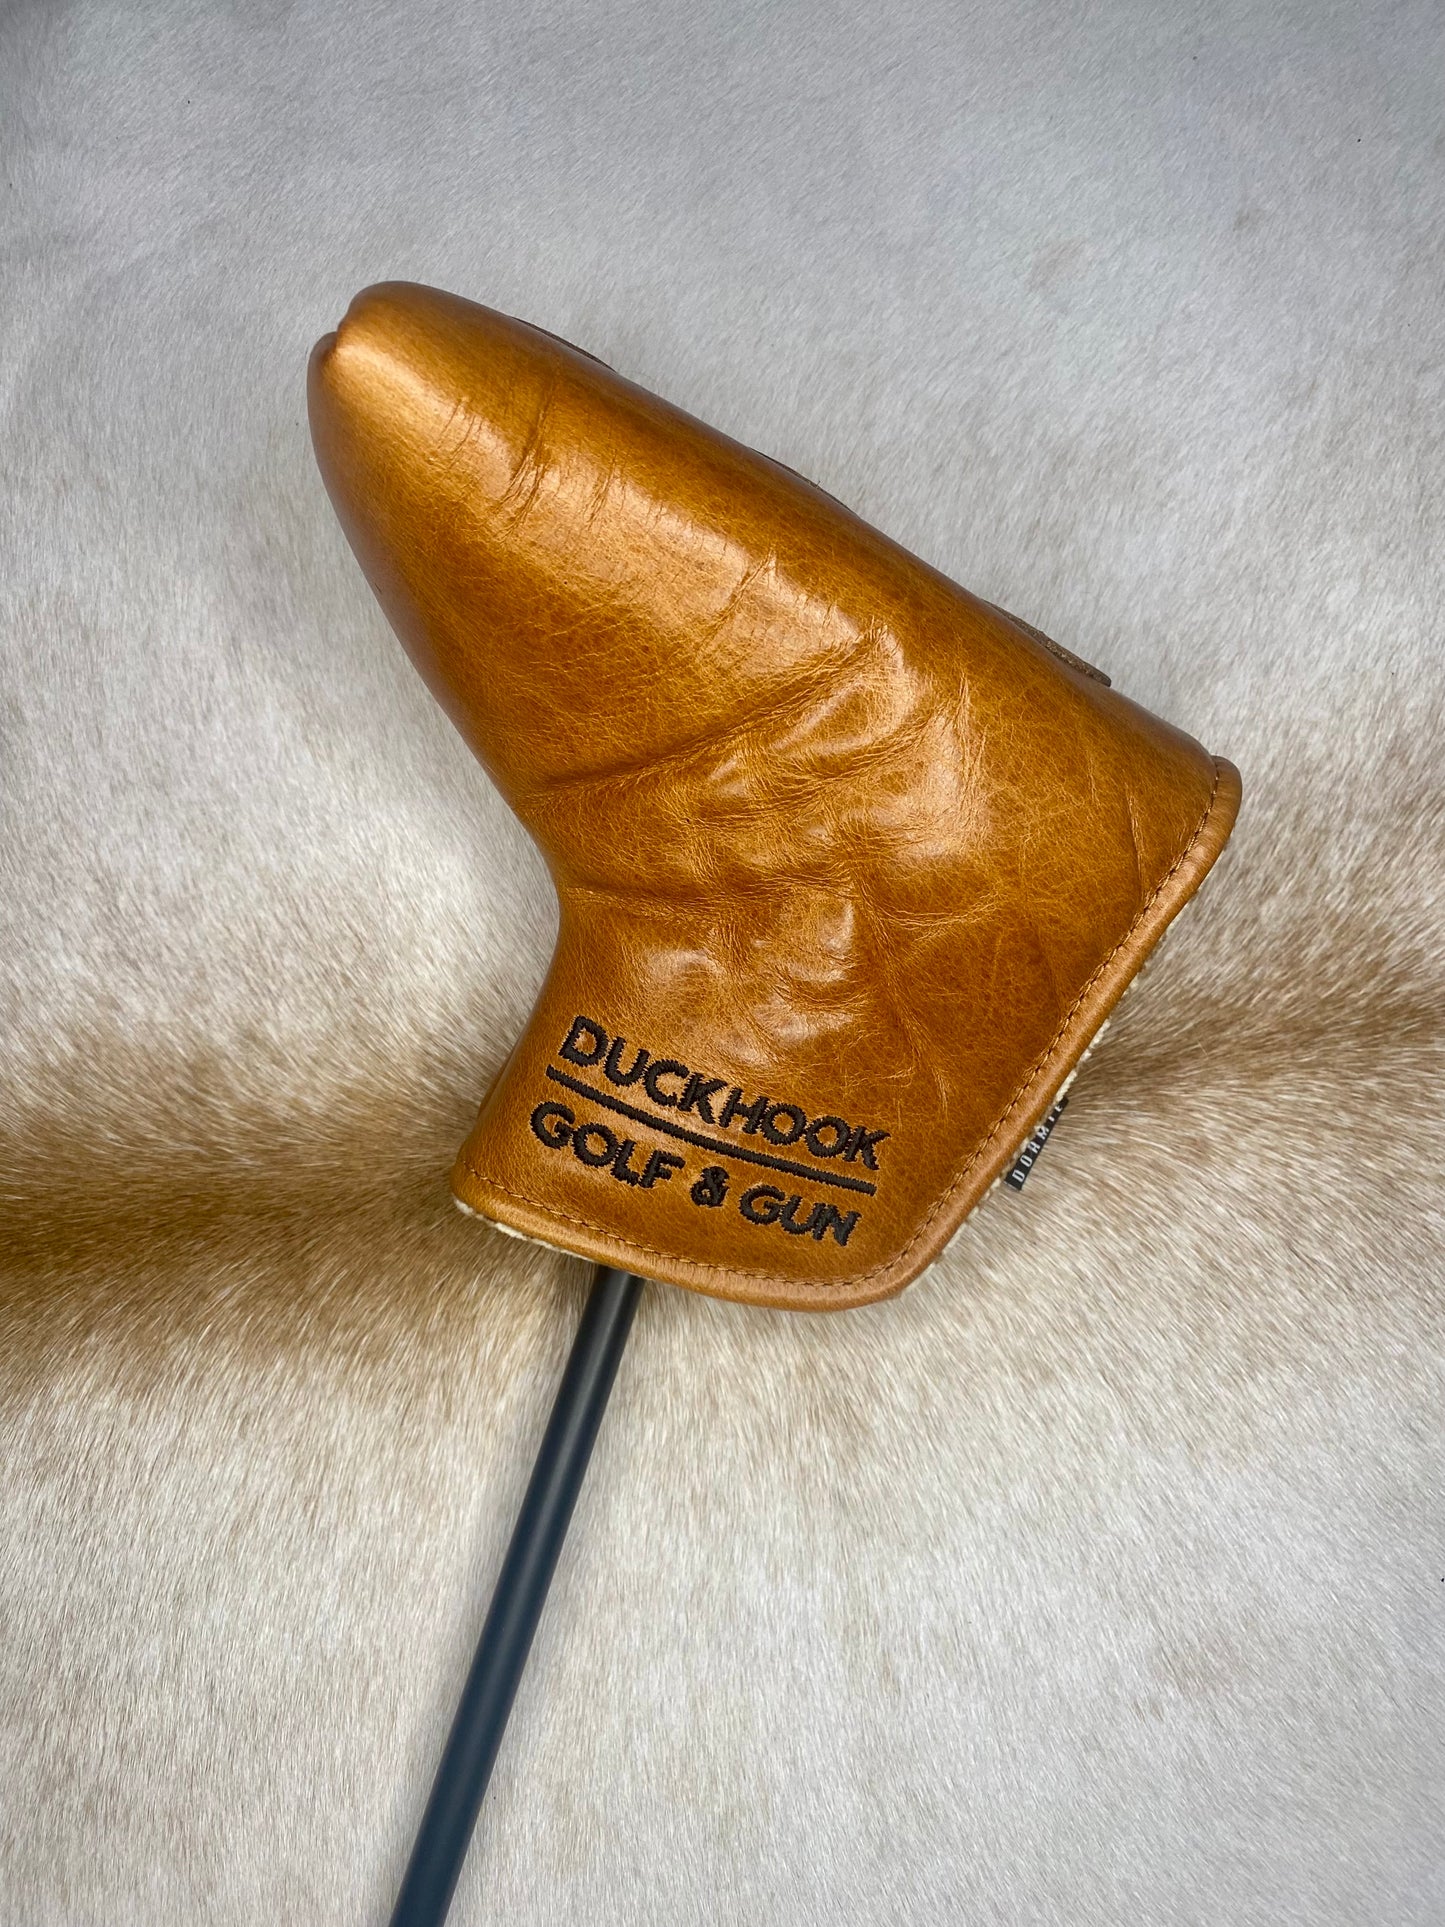 Duckhook Golf & Gun Collection Headcover